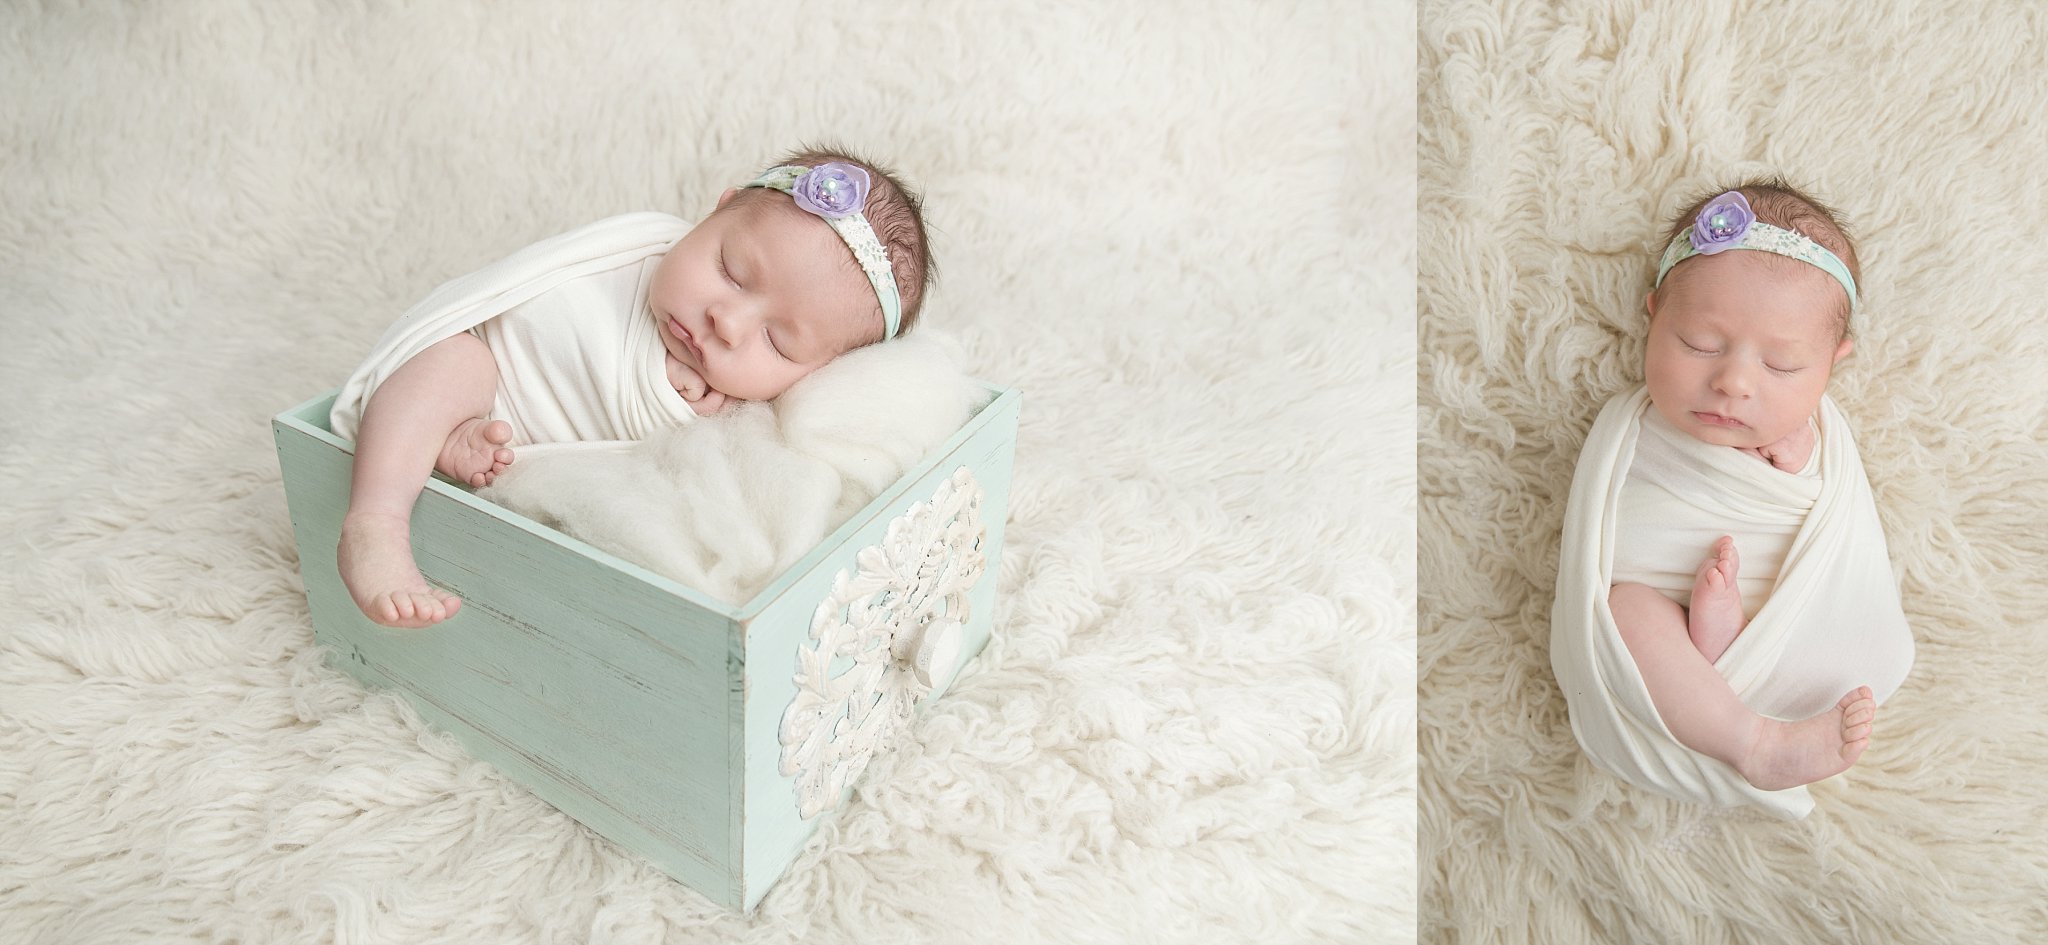 st-louis-newborn-photographer-baby-girl-in-mint-box-with-cream-fur.jpg